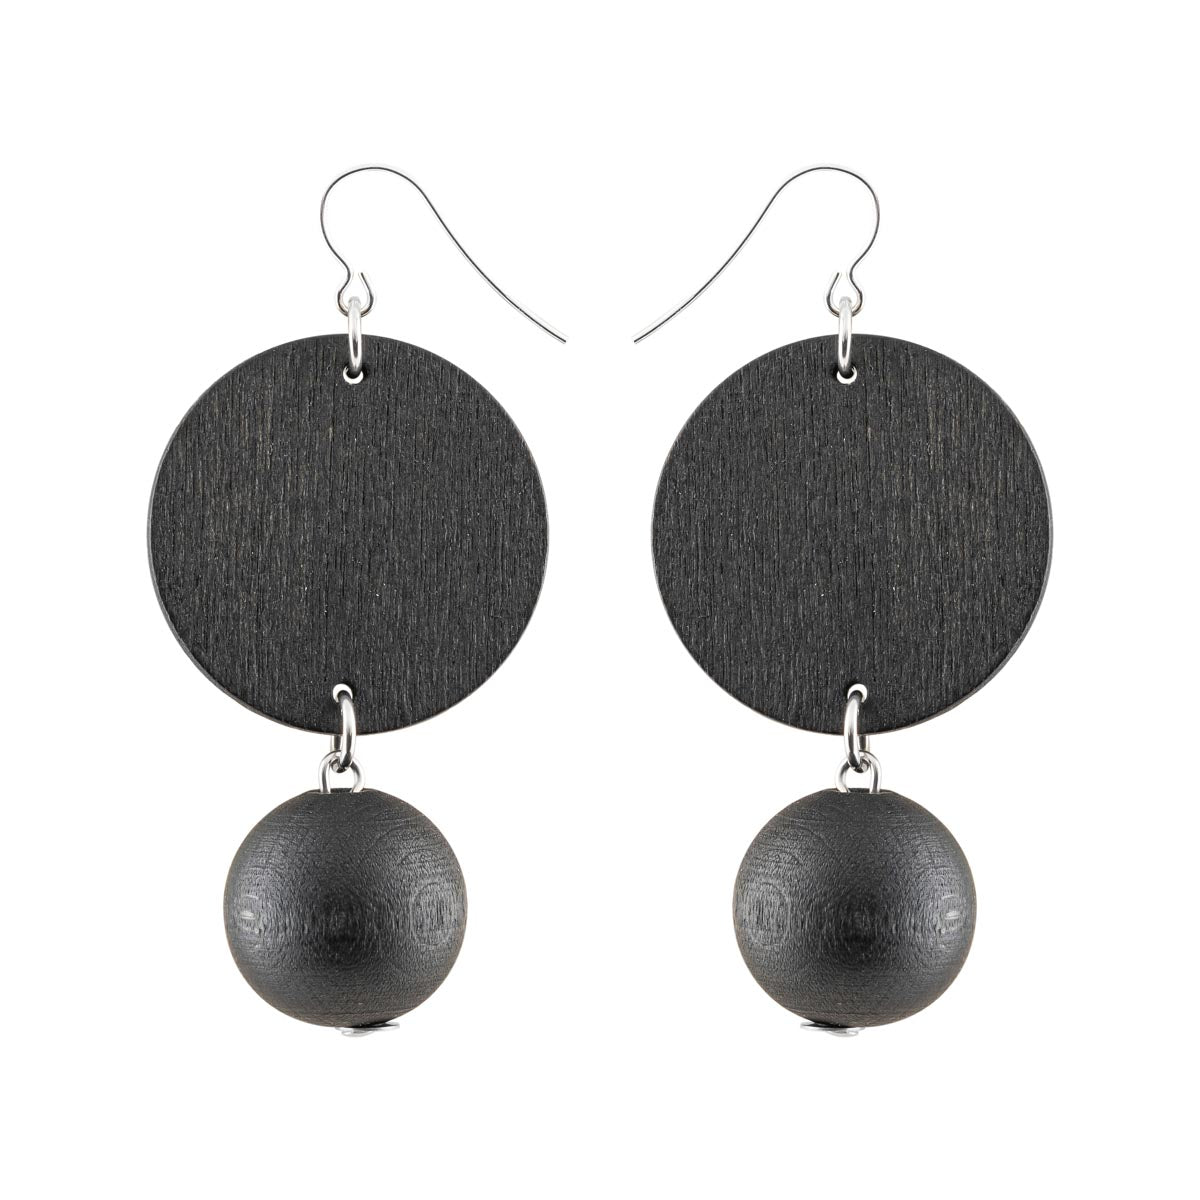 Apollo Mini earrings, black